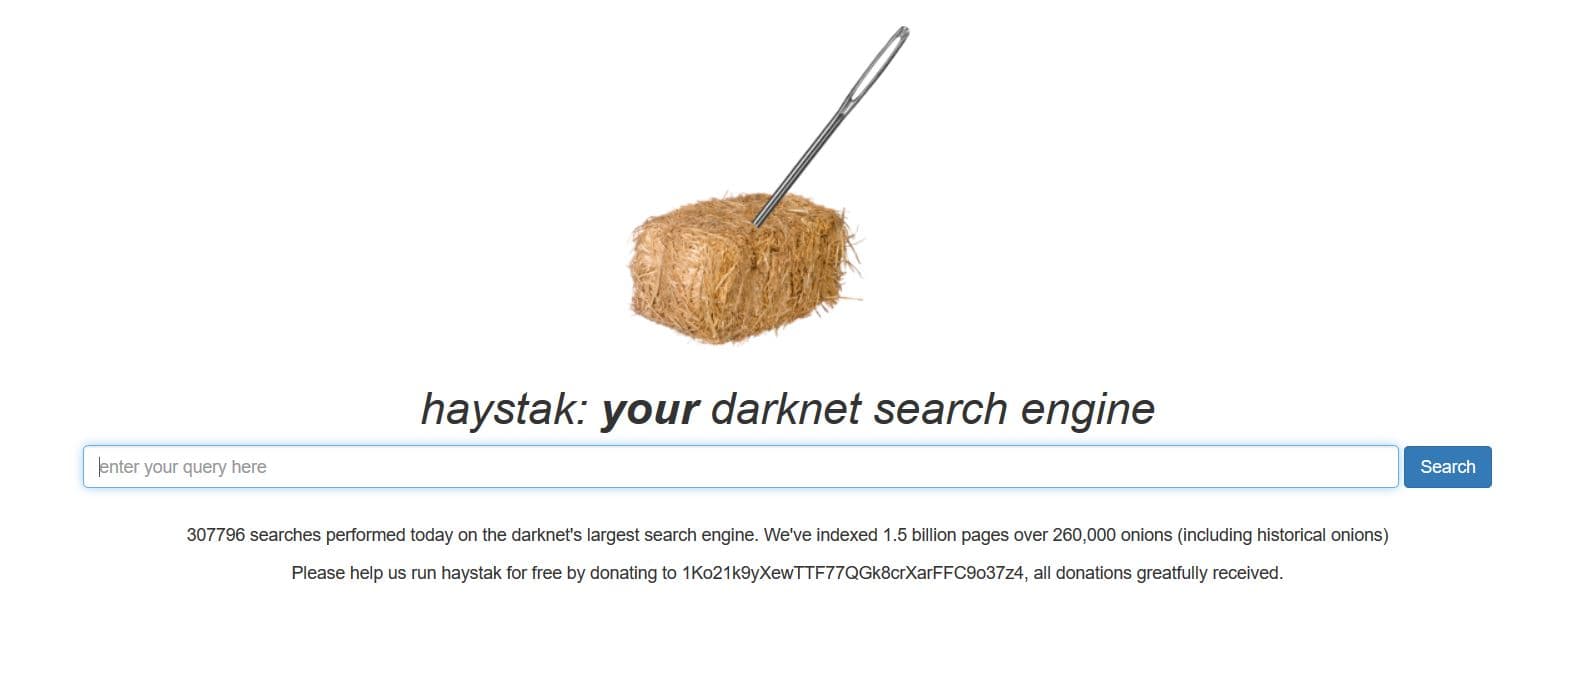 Search engines for darknet гирда tor browser скачать на русском официальный сайт mega2web